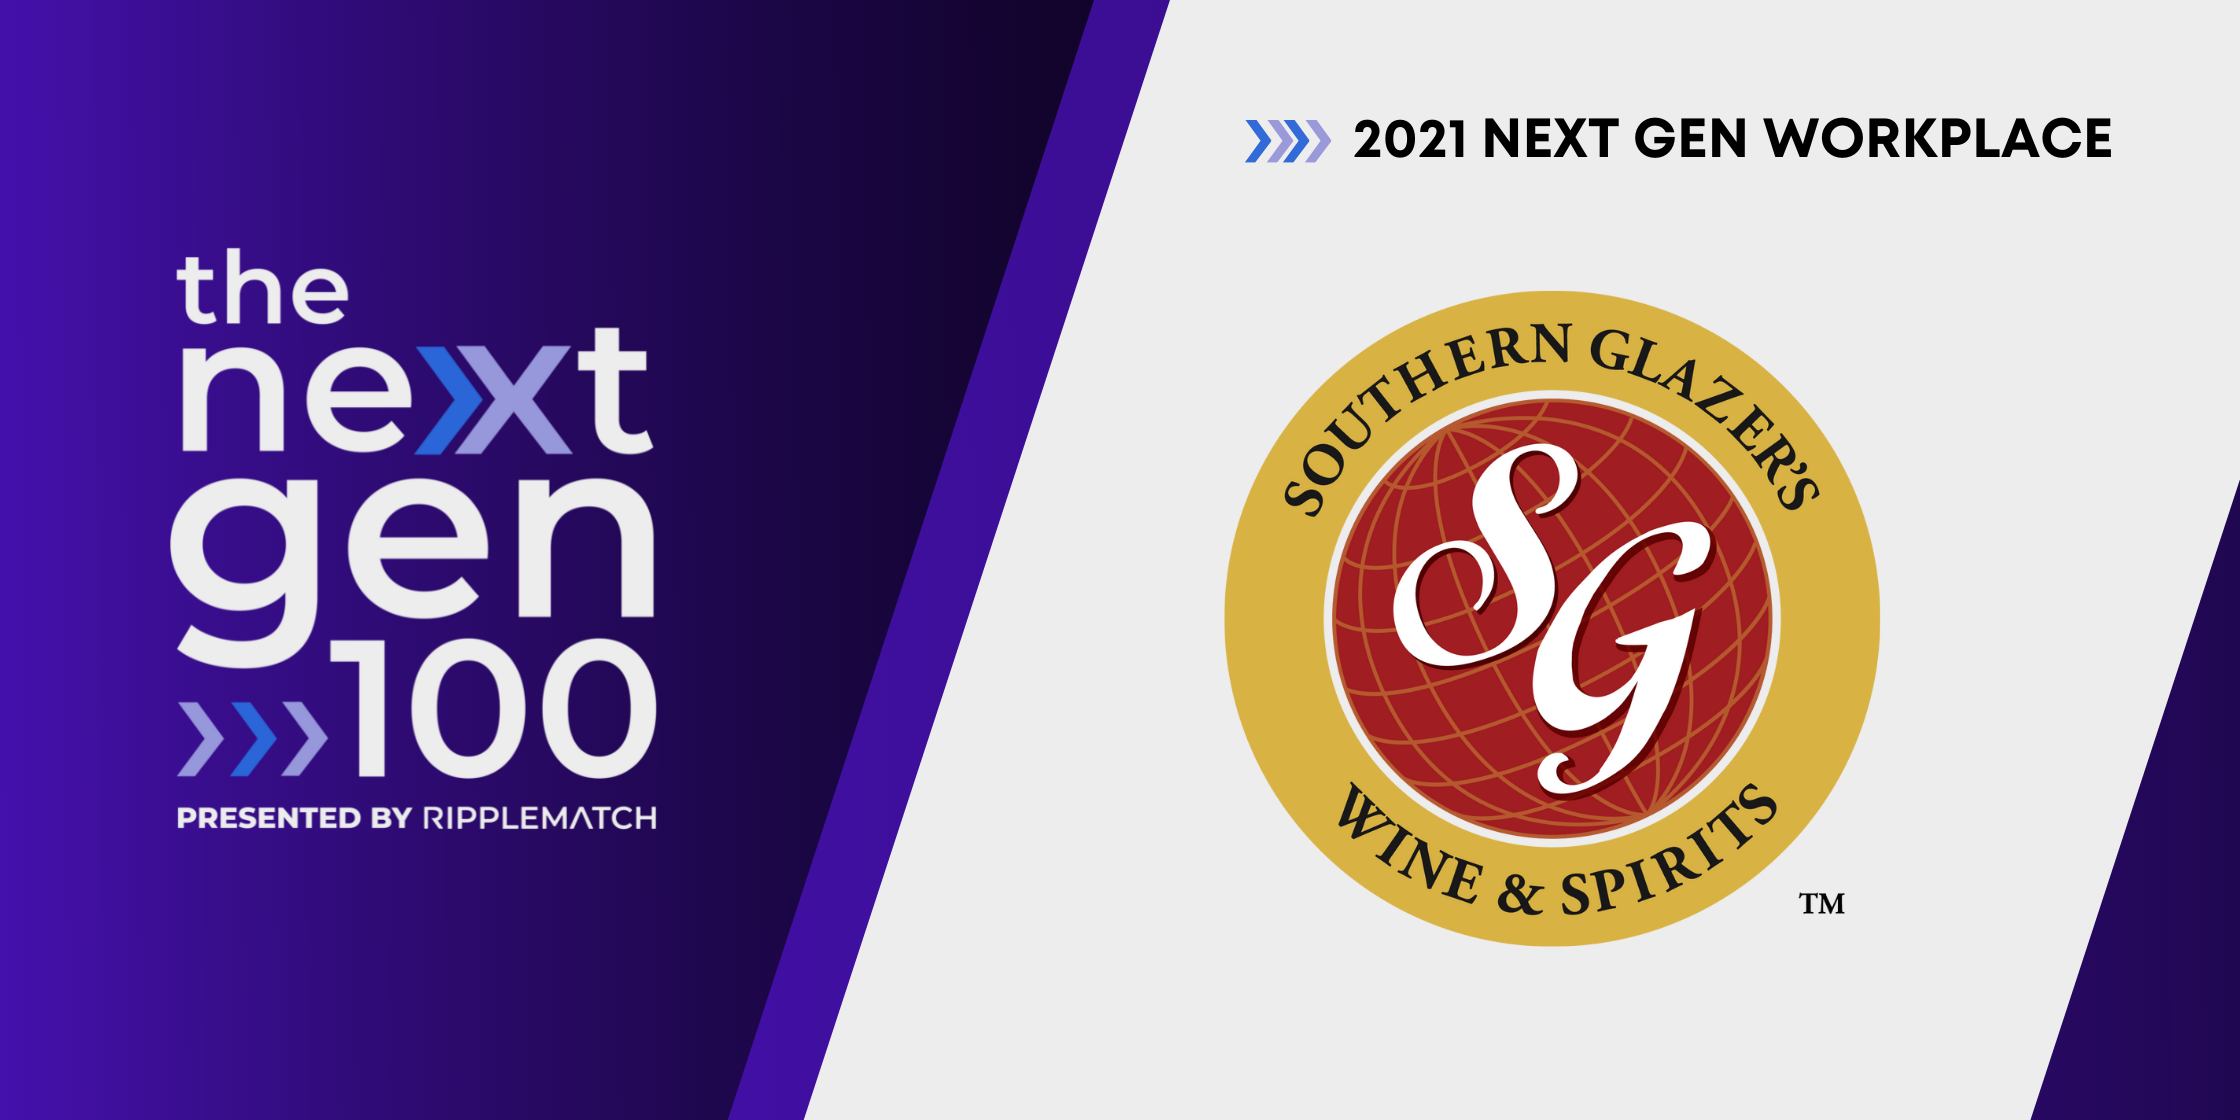 Southern Glazers Wine & Spirits_landing & social media